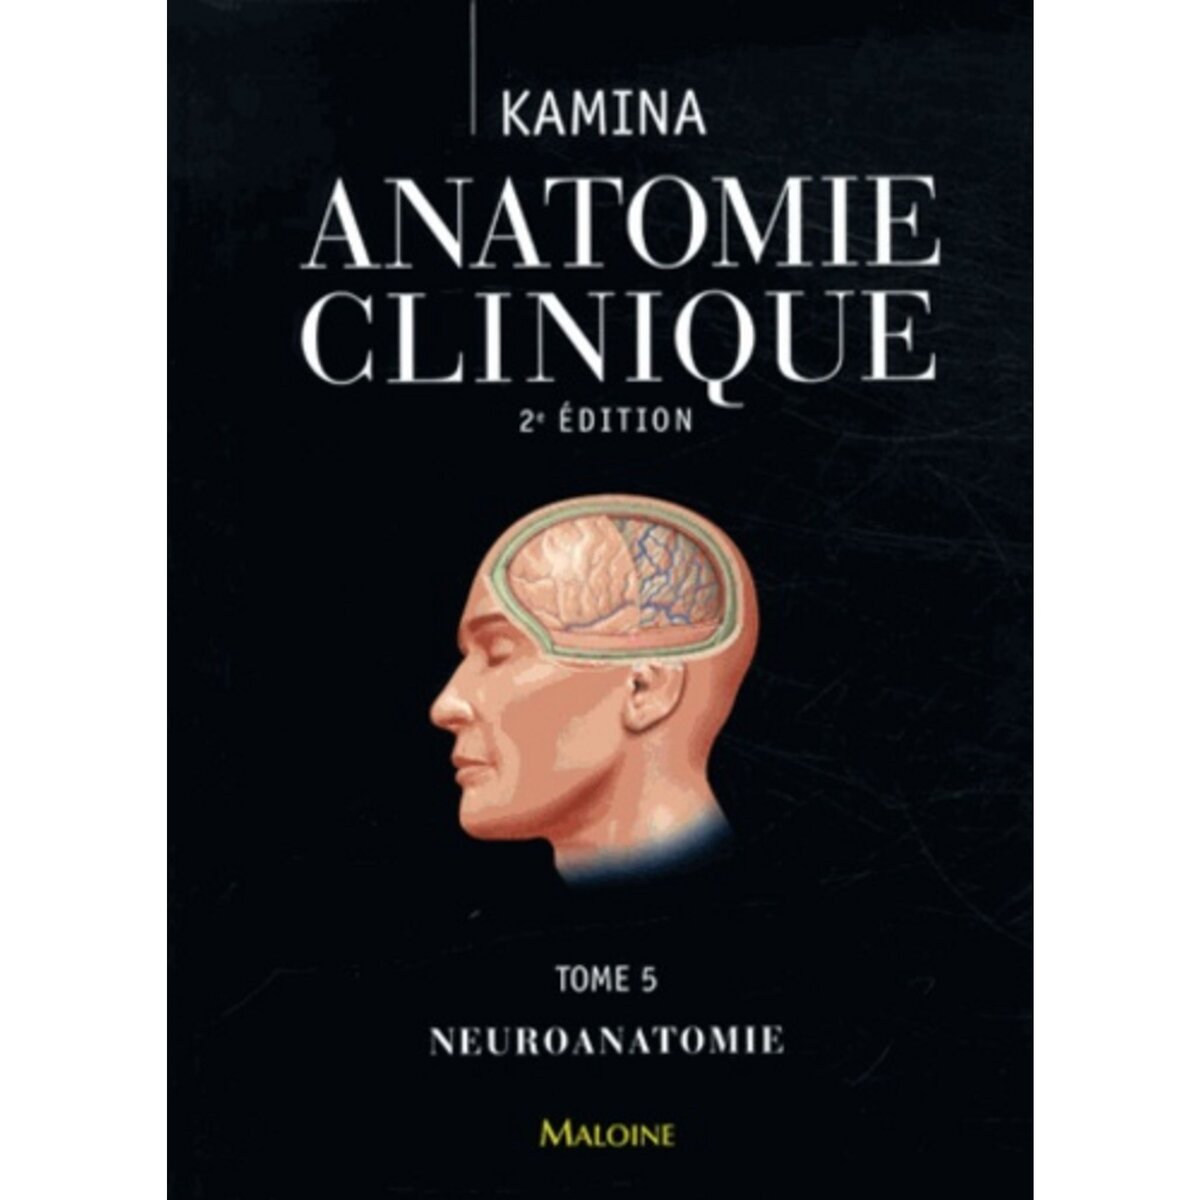  ANATOMIE CLINIQUE. TOME 5, NEUROANATOMIE, 2E EDITION, Kamina Pierre